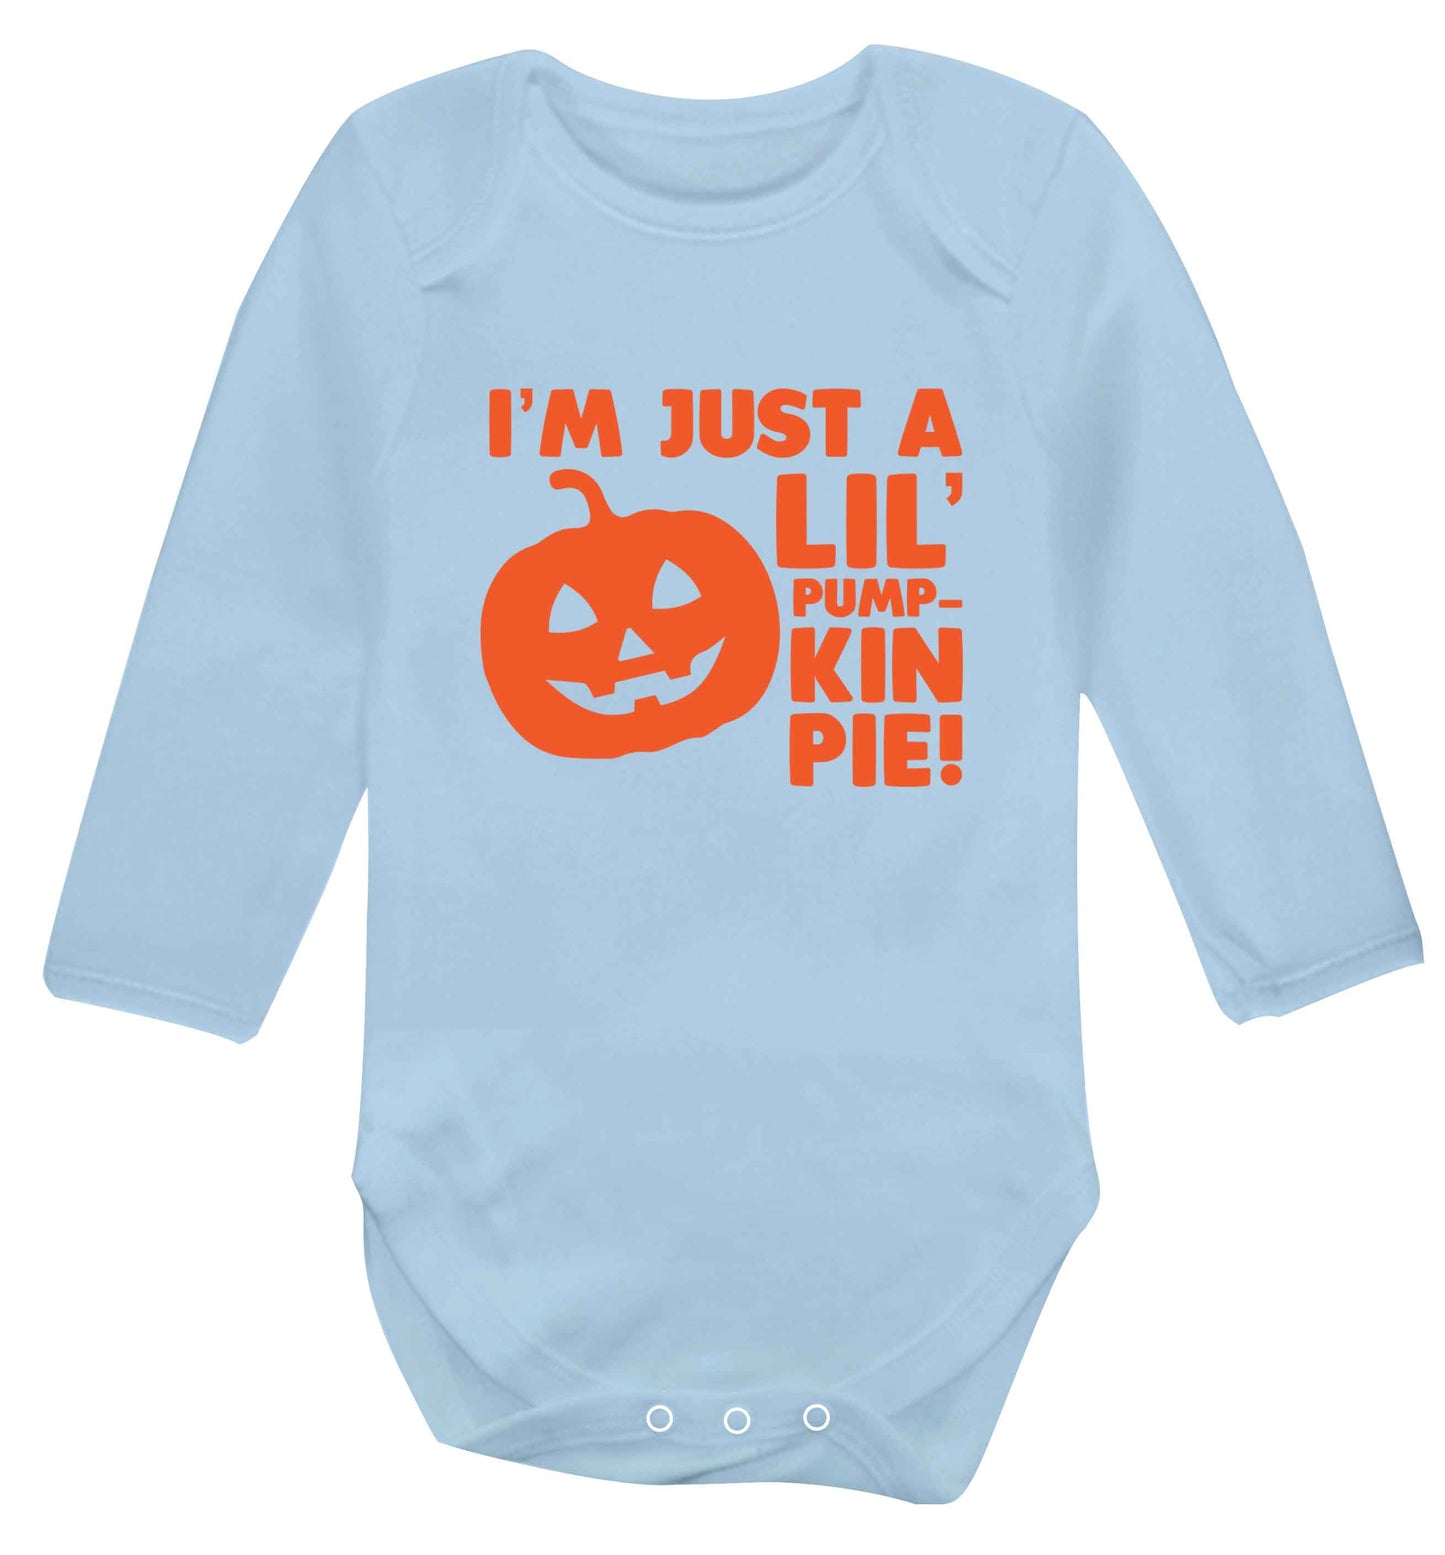 I'm just a lil' pumpkin pie baby vest long sleeved pale blue 6-12 months